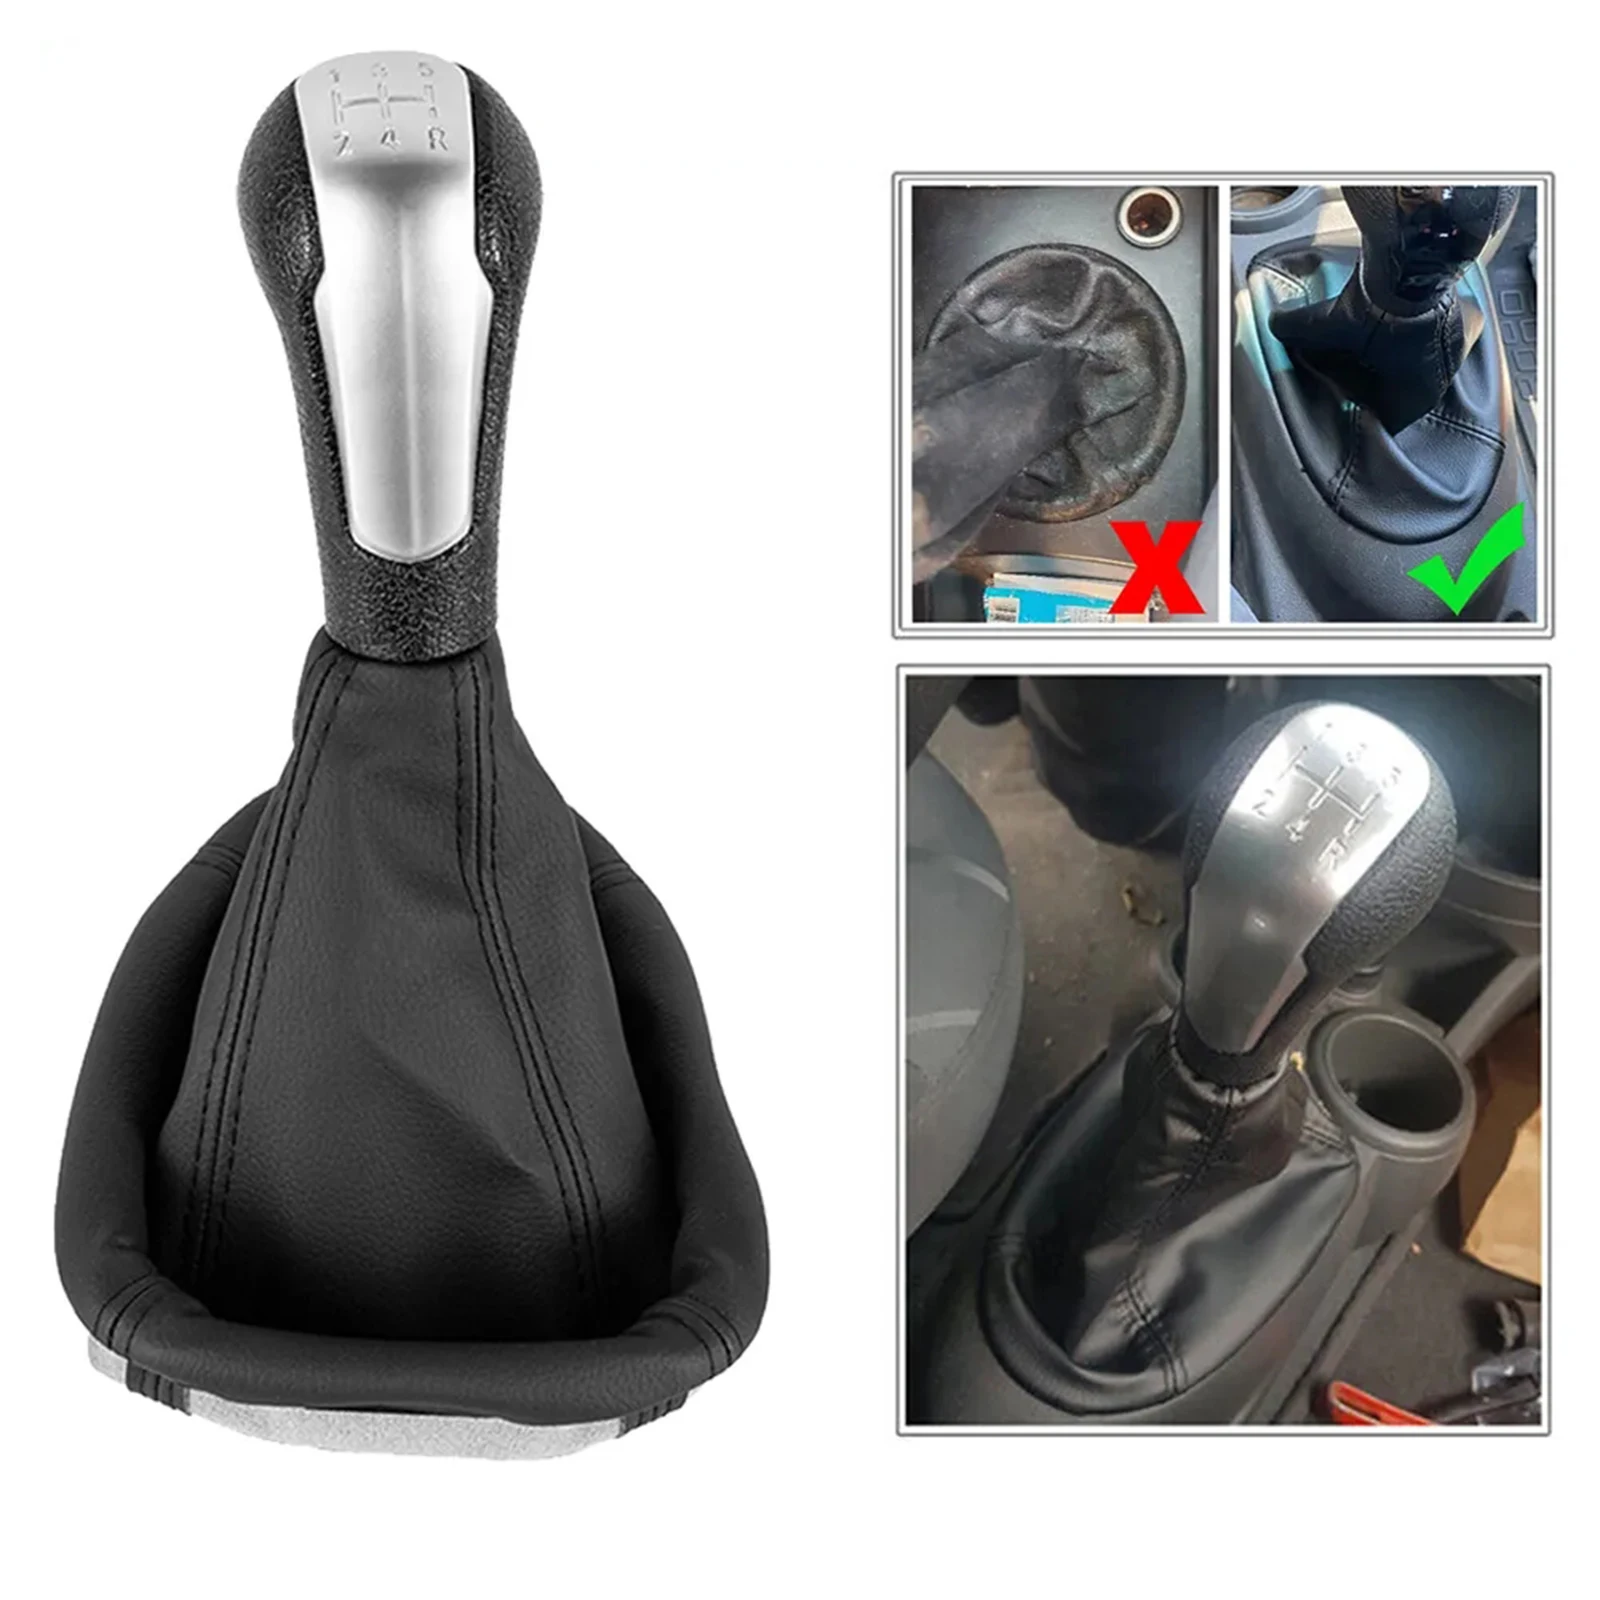 

Gear Lever Stick Shifter Handle 5 Speed Manual Gear Shift Knob+Gaiter For Chevrolet Spark /Holden Barina Spark M300 2011-2015